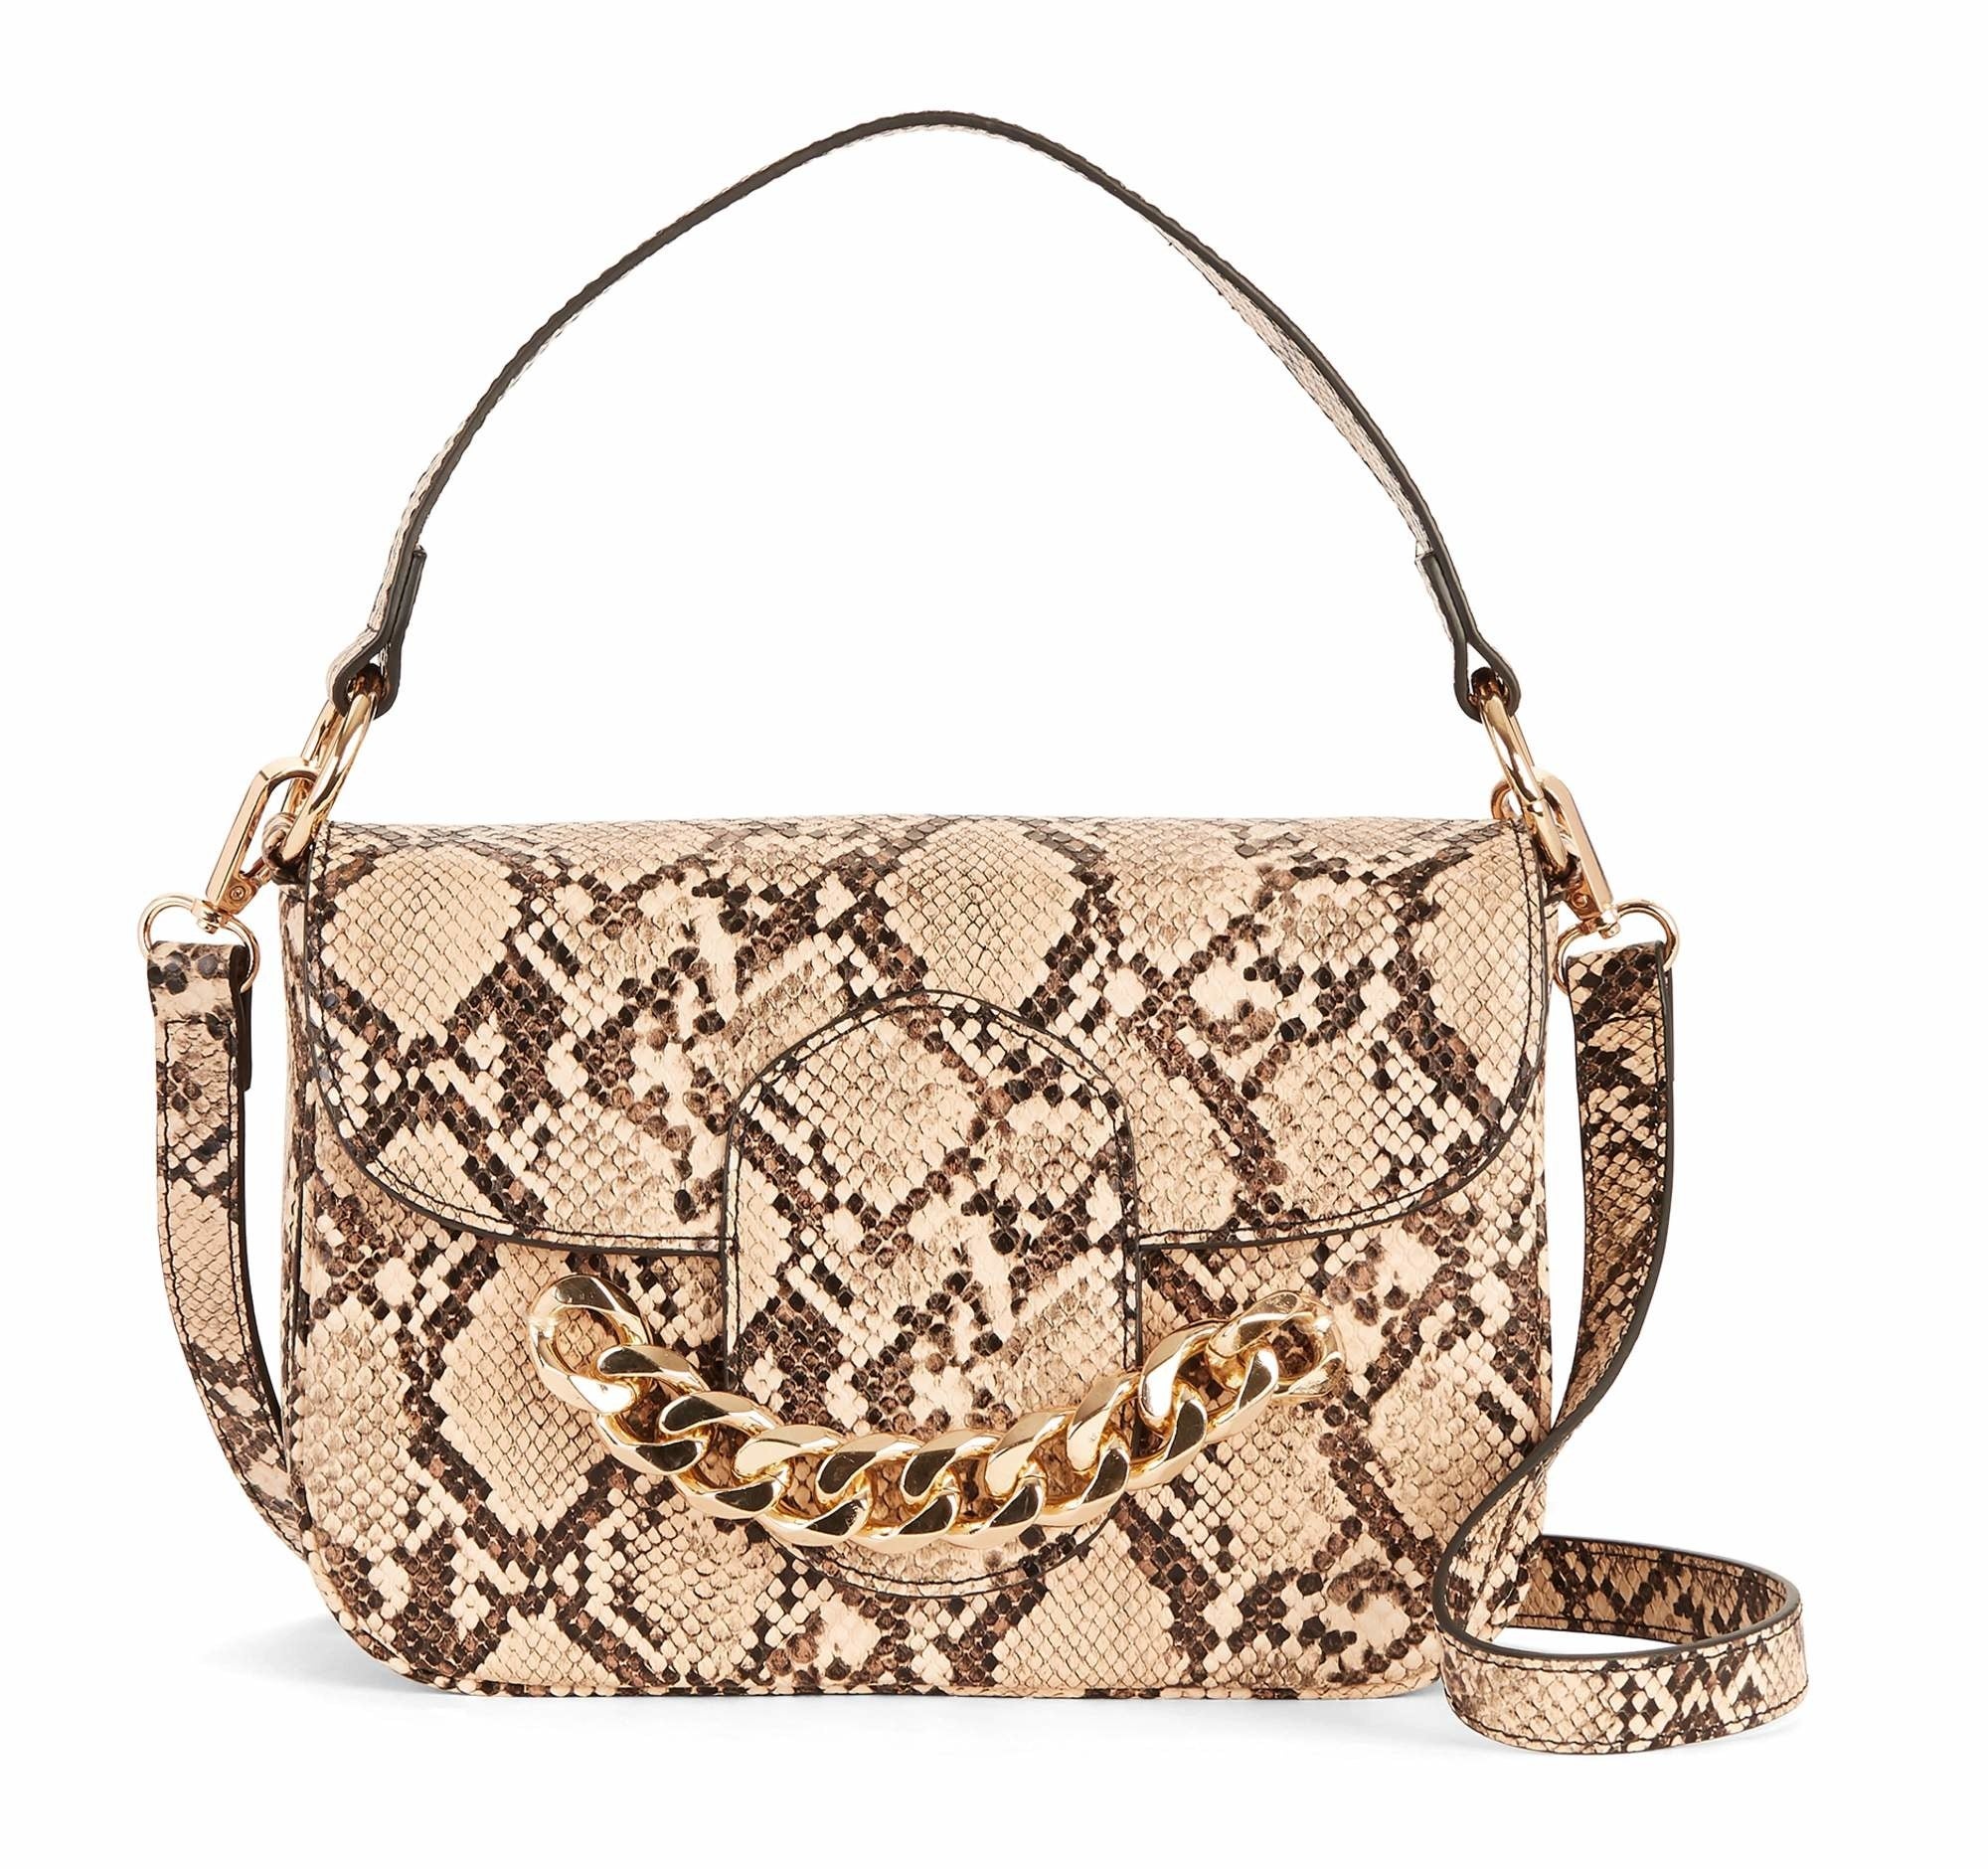 the faux snakeskin purse